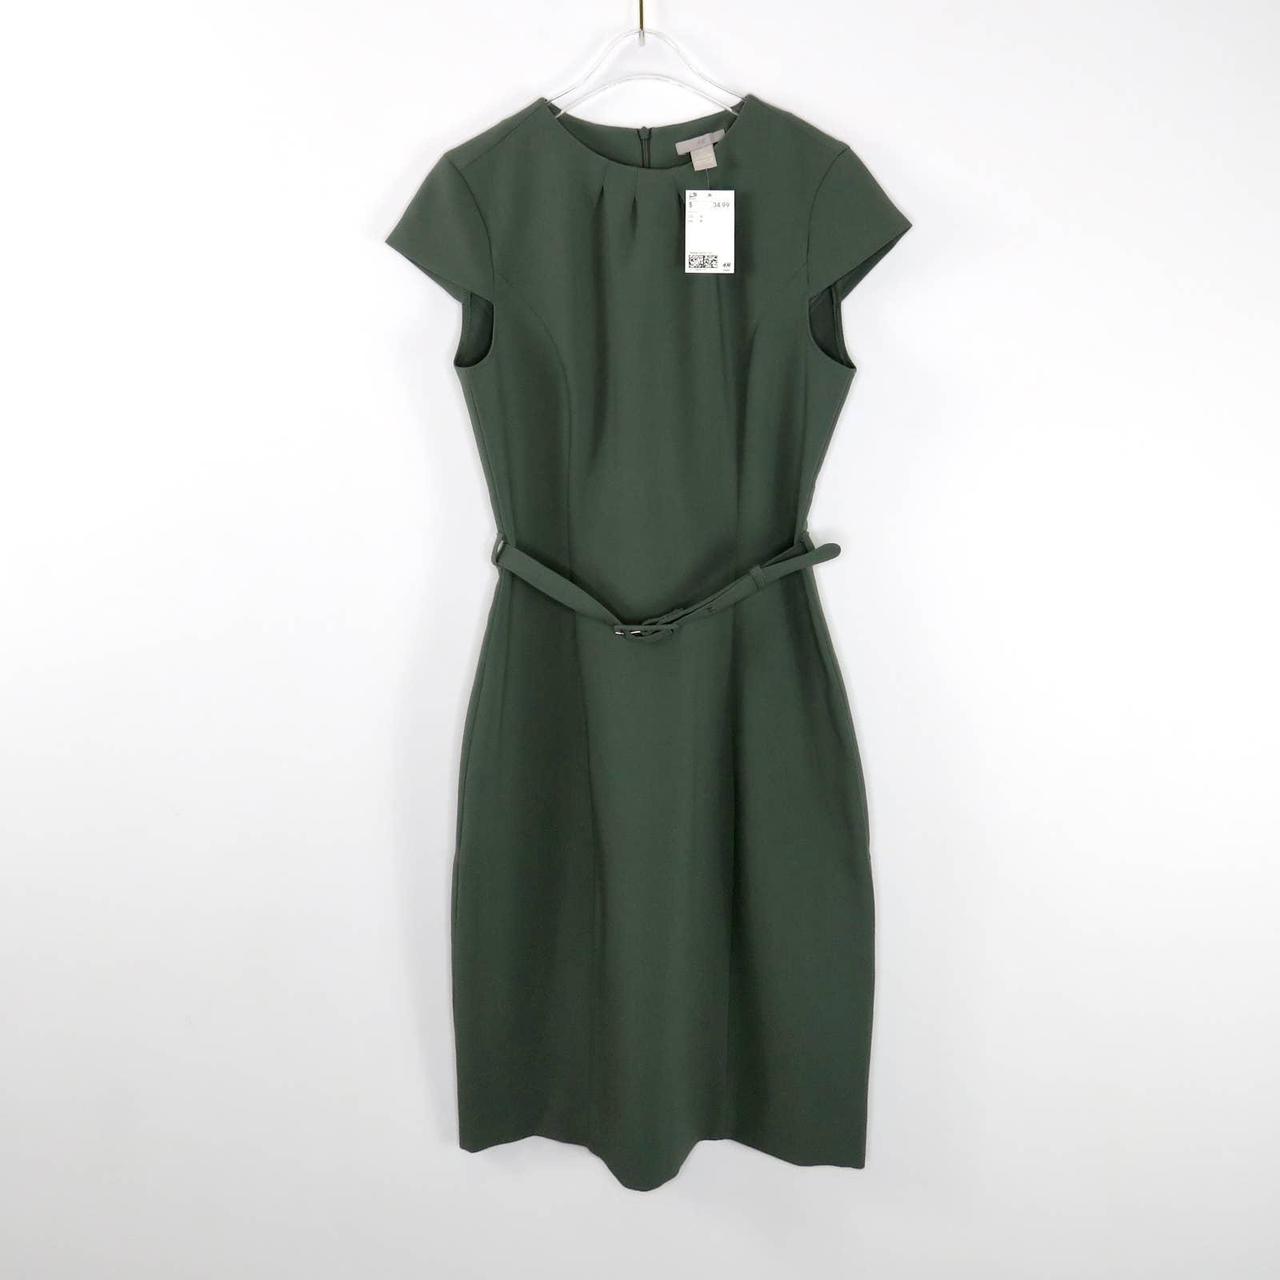 H&M Sage Green Dress. High Neck Cap Sleeve Midi... - Depop